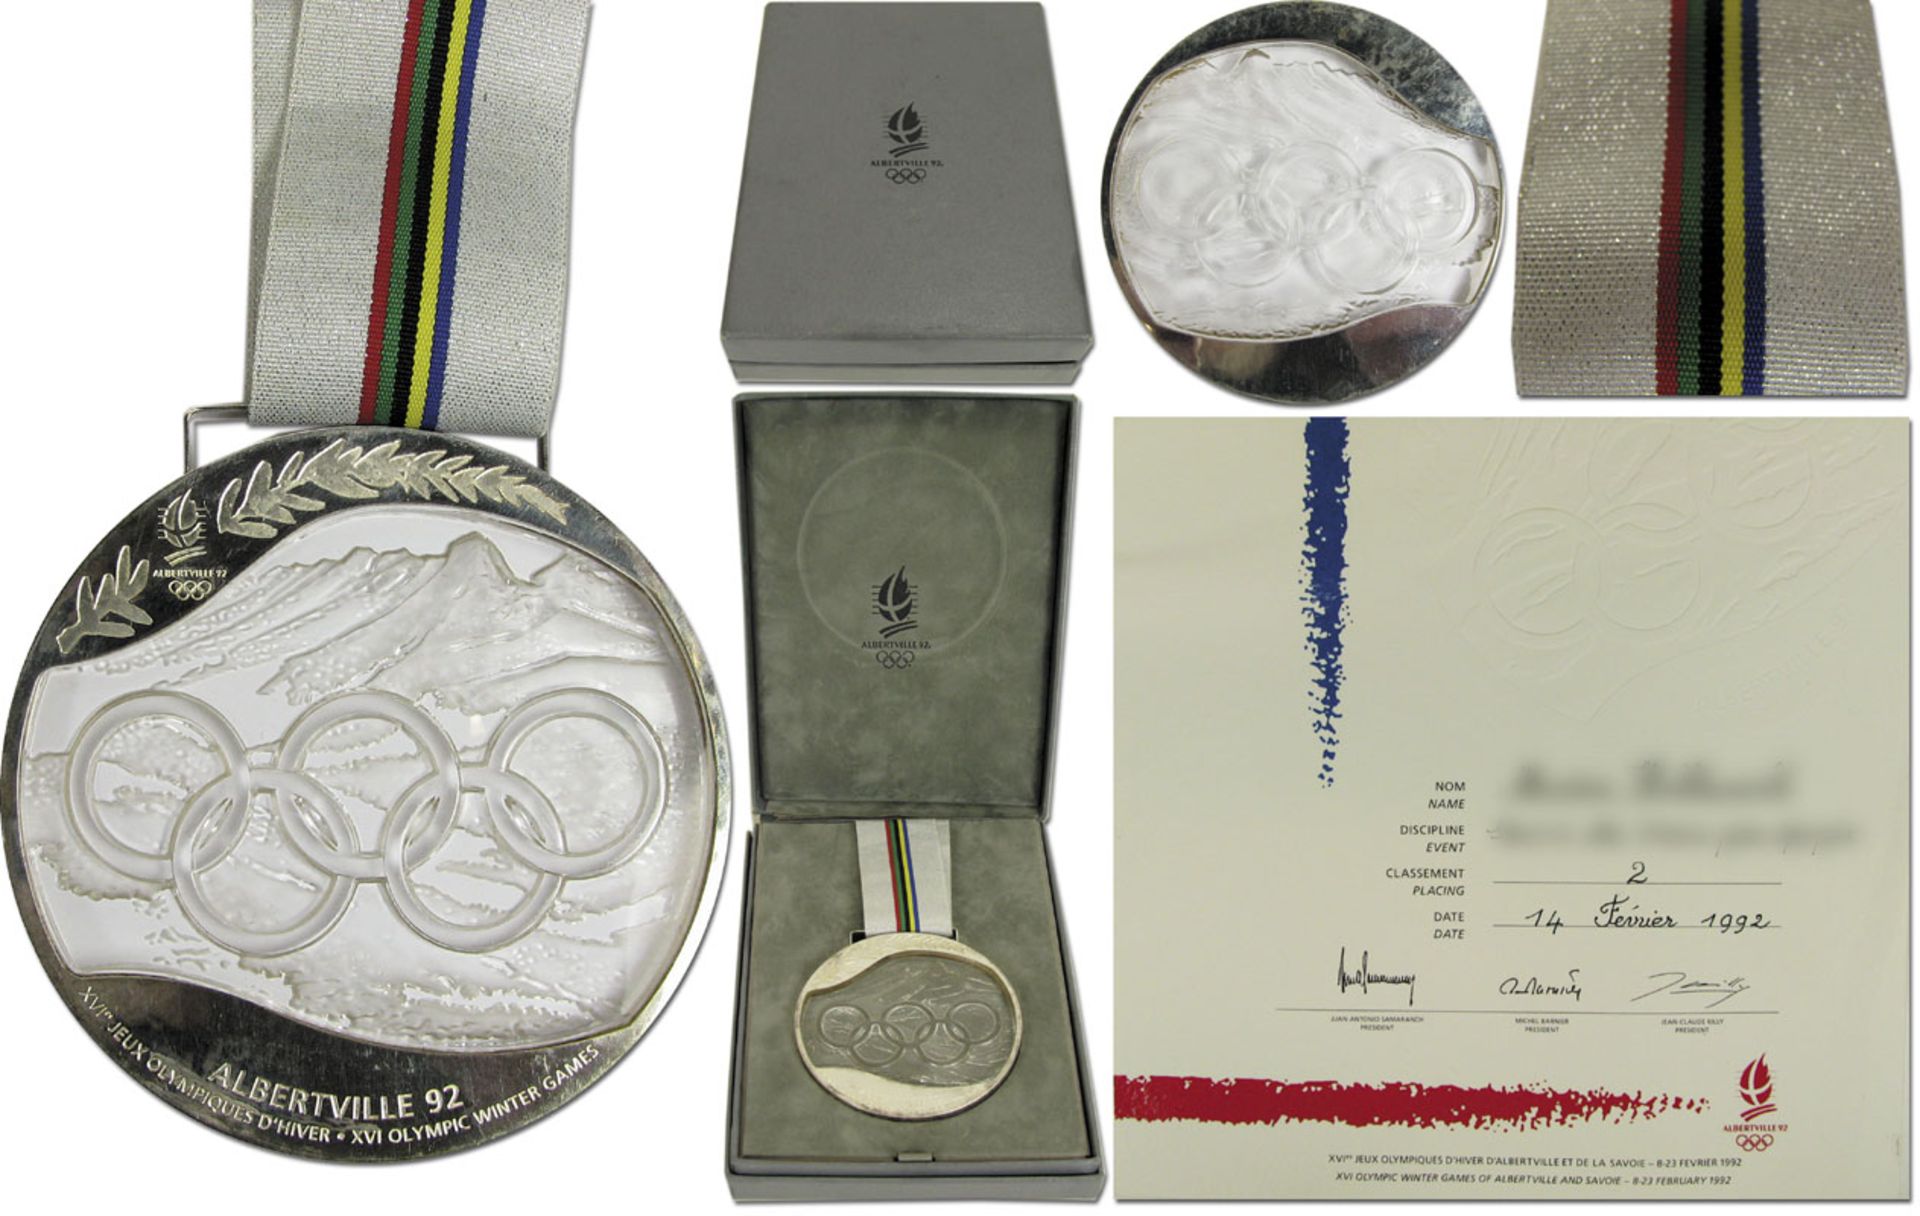 Olympic Winter Games 1992 Silver Winner medal - winner medal from the Olympic Games in Albertville 1